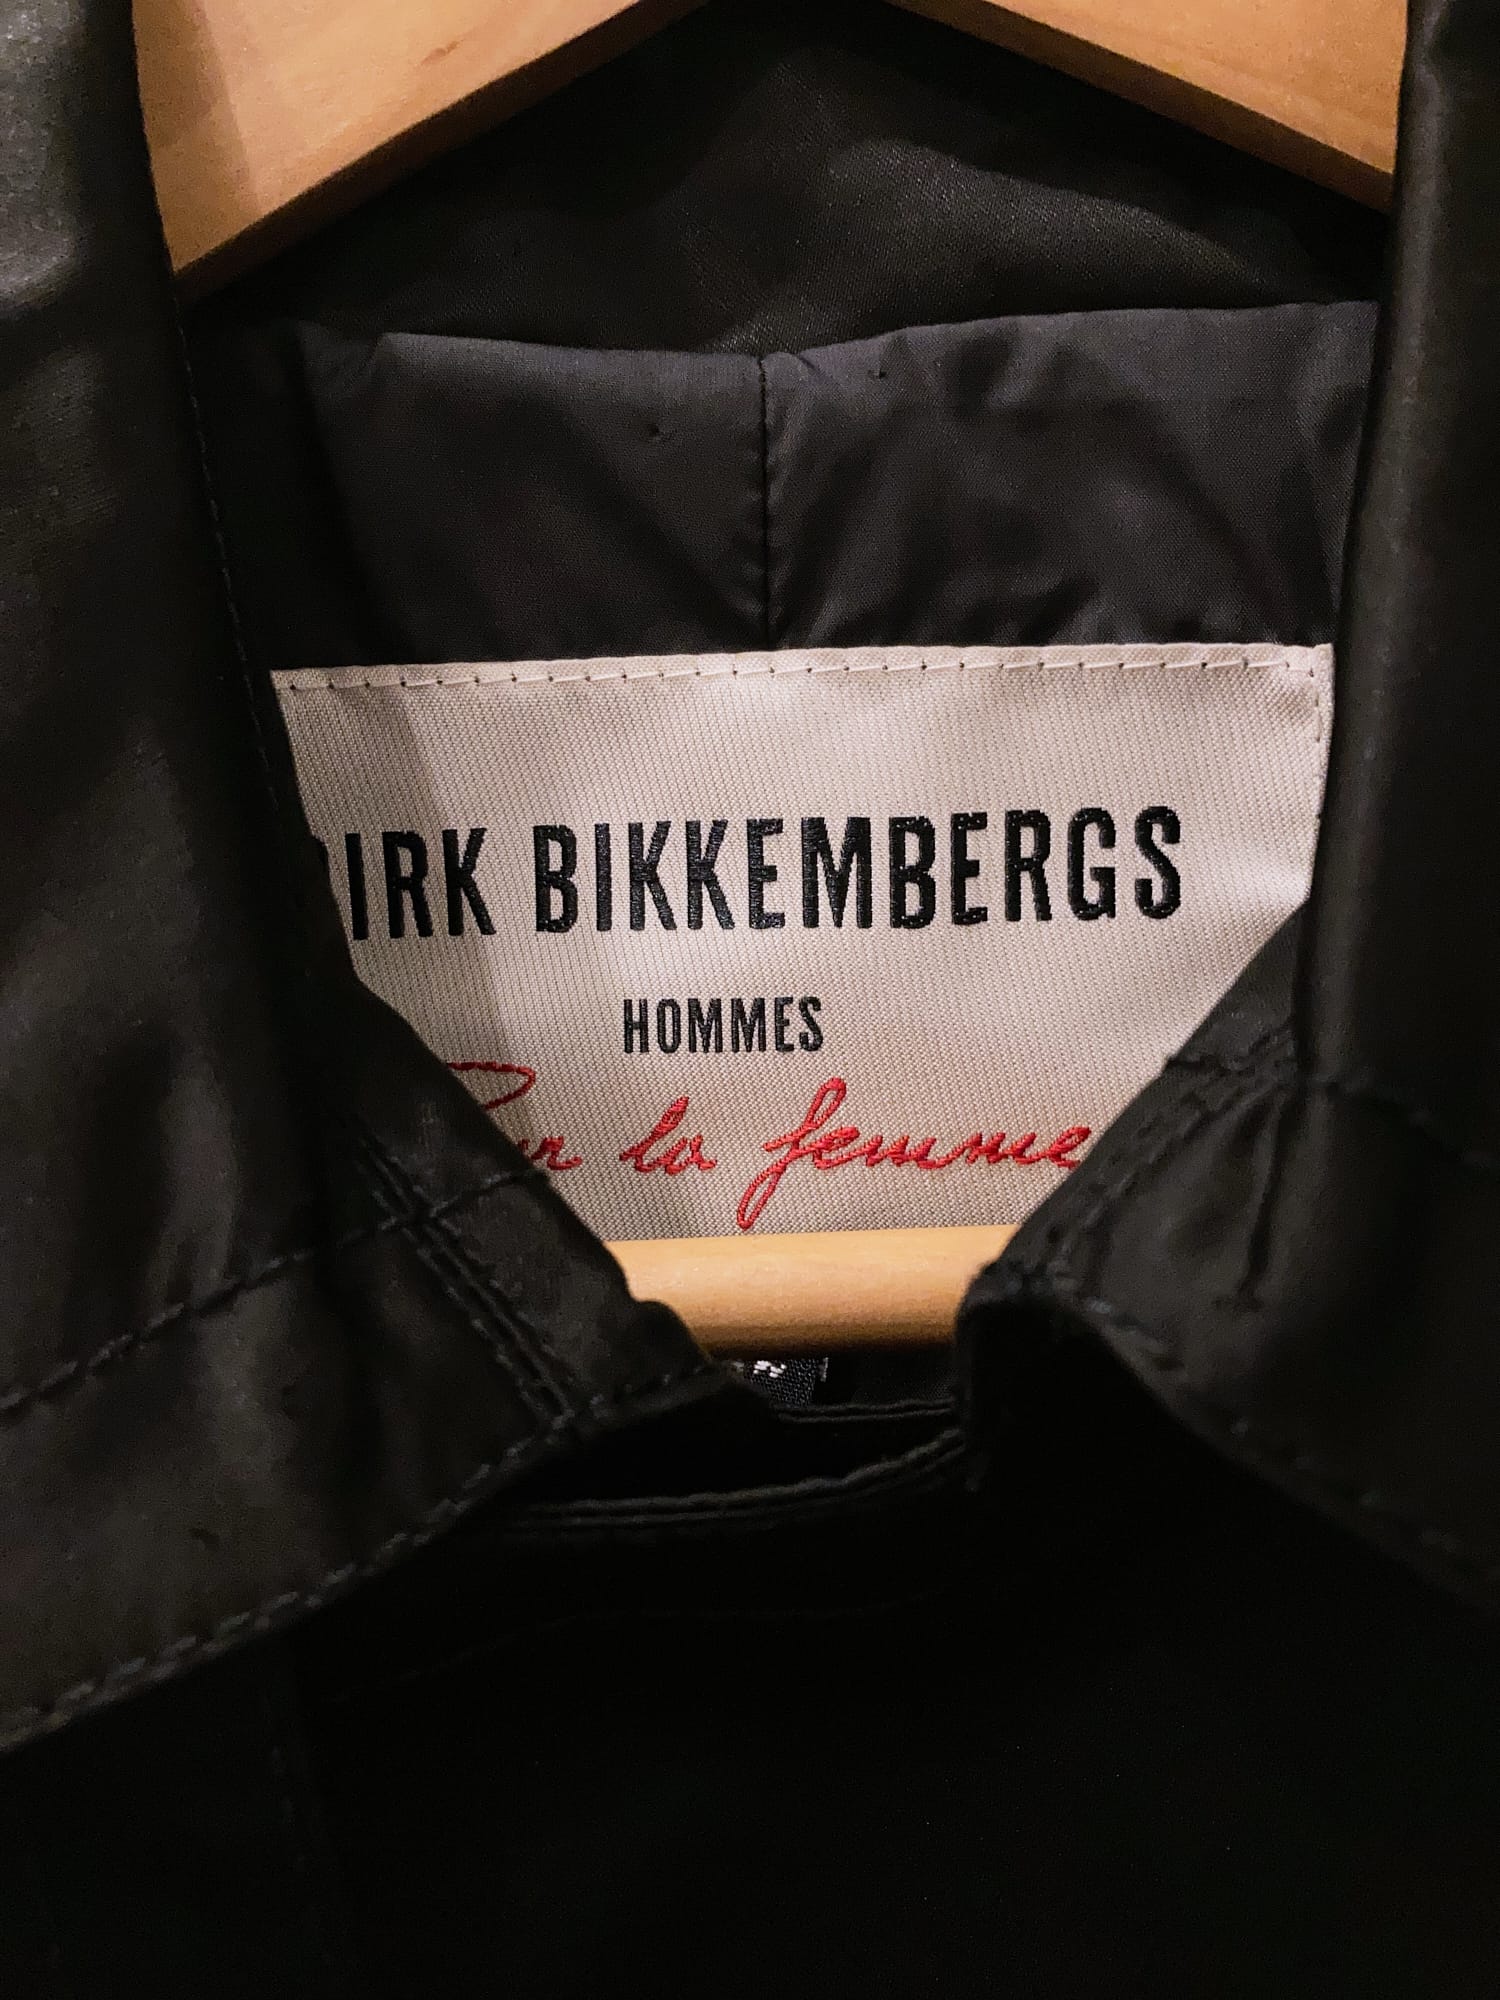 Dirk Bikkembergs Hommes Pour La Femme 1990s black satin trench coat